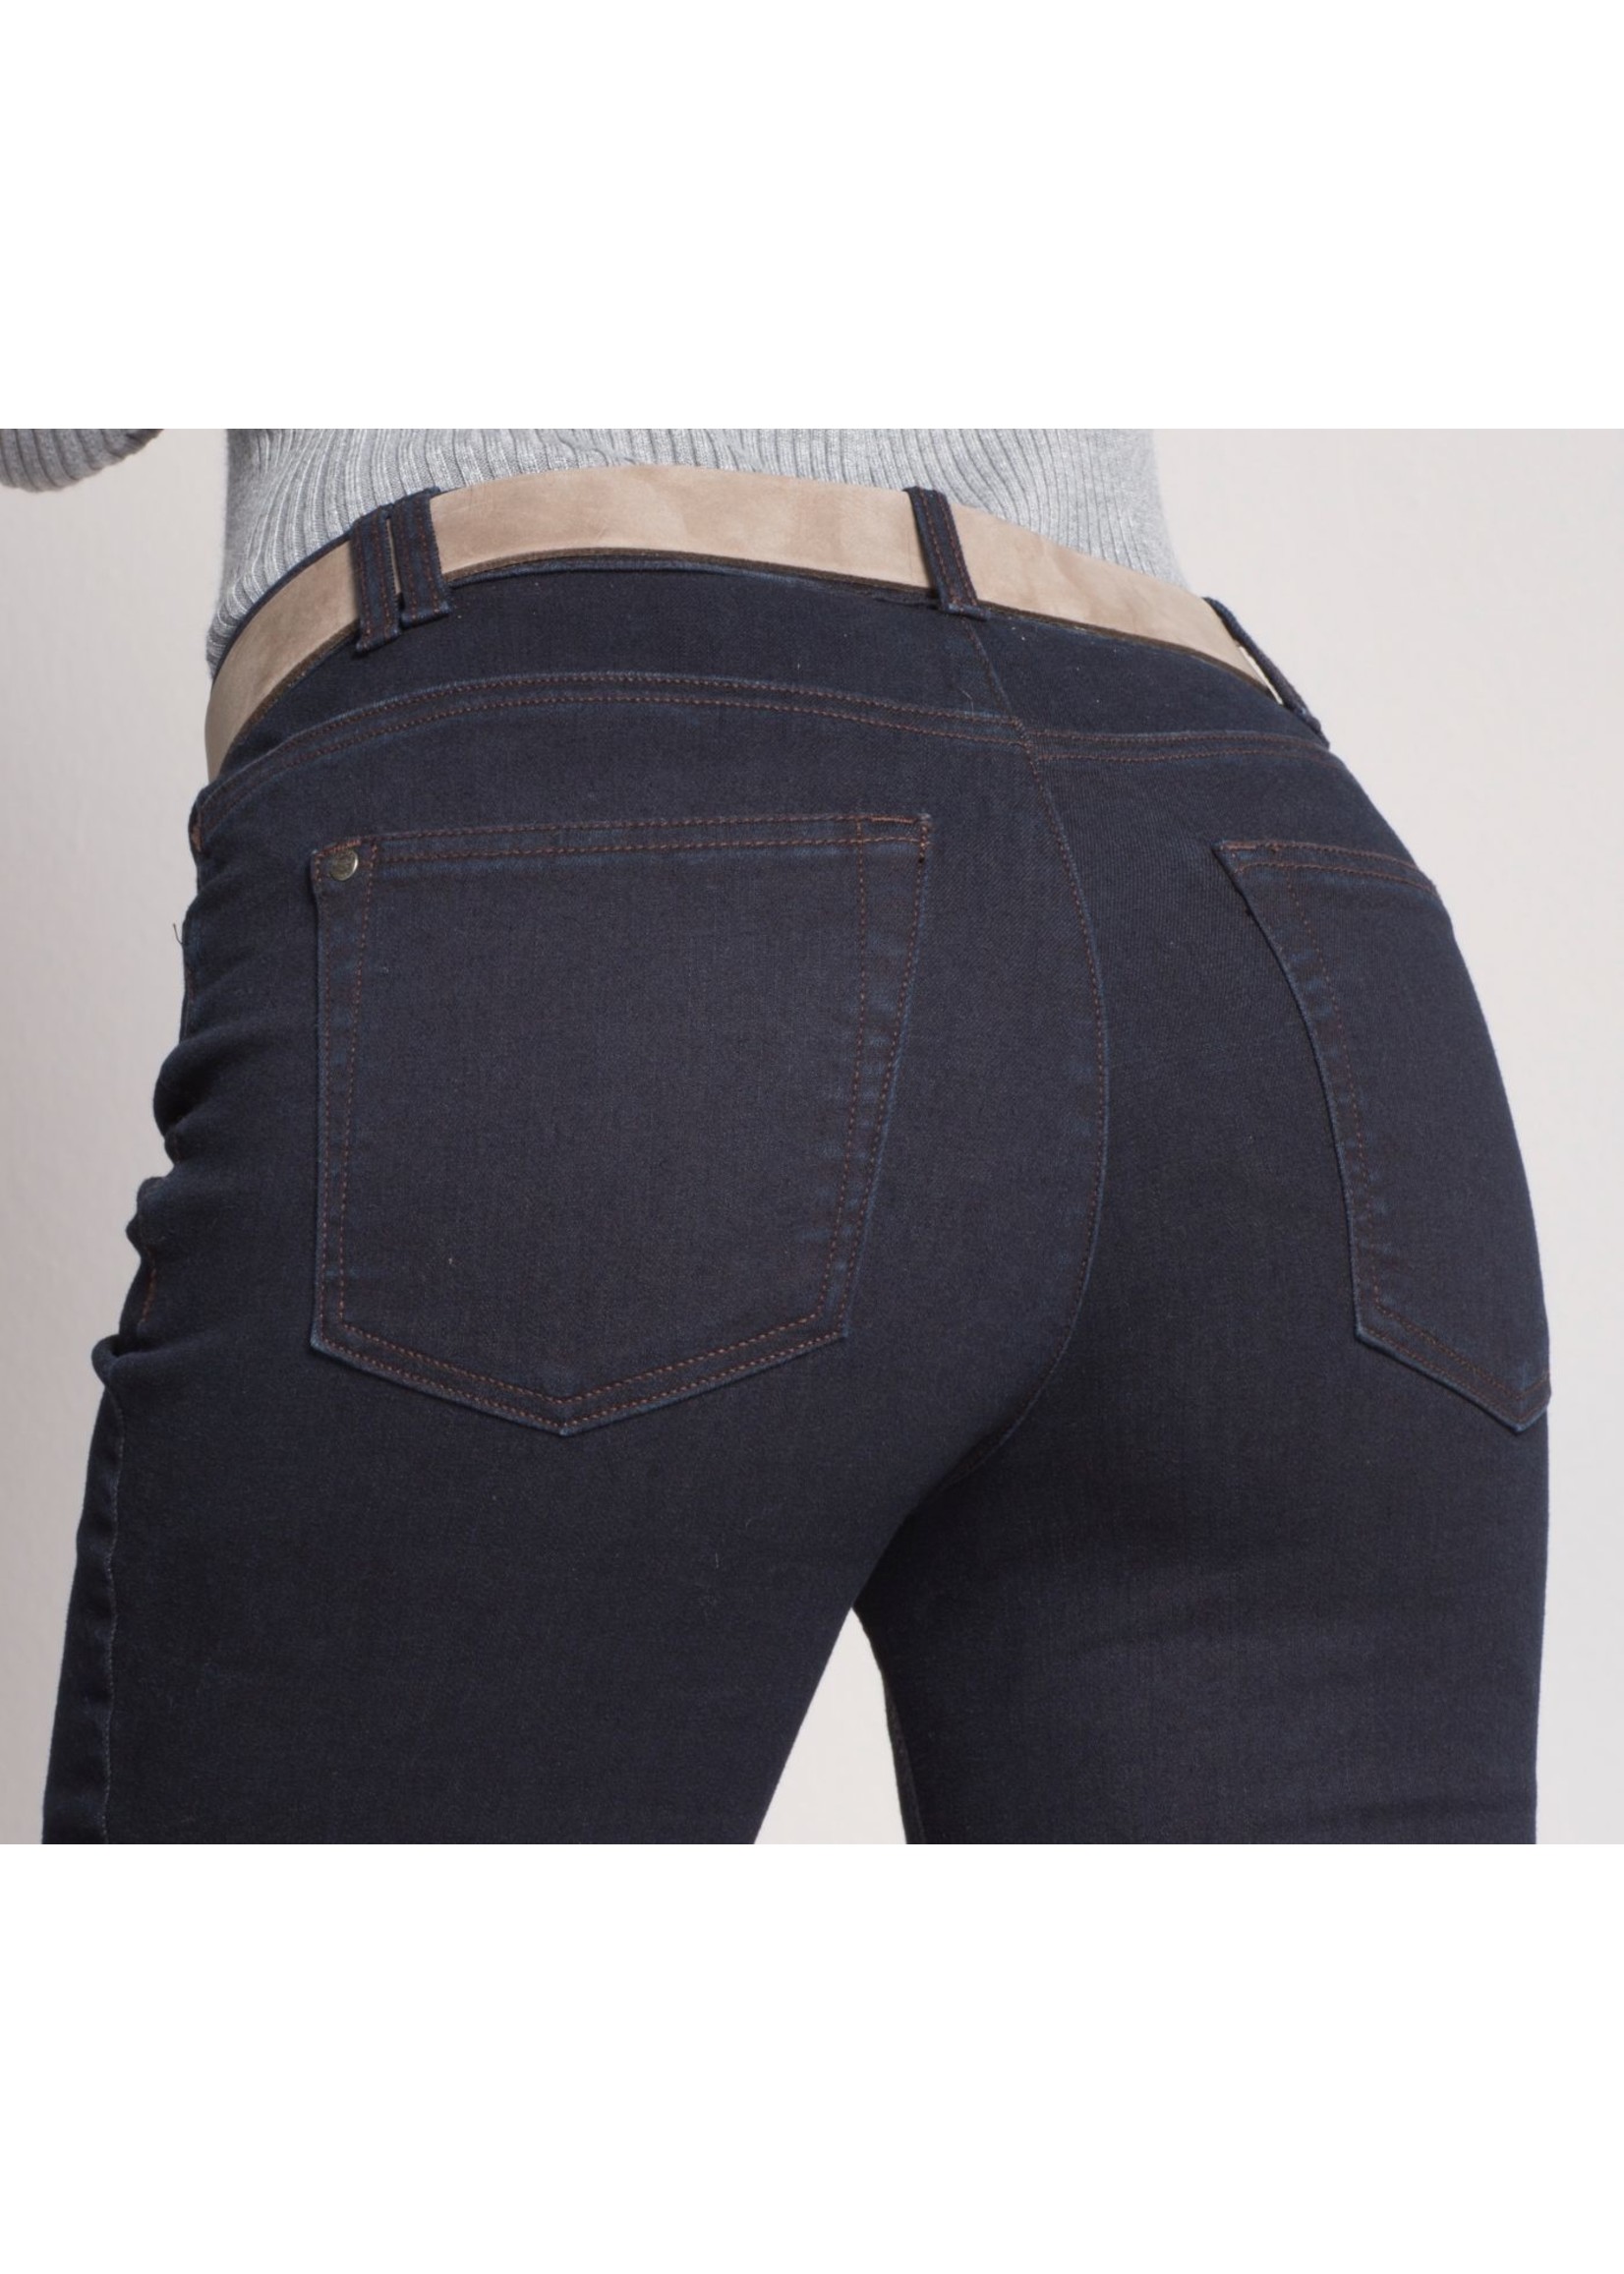 Stark Body perfect jeans